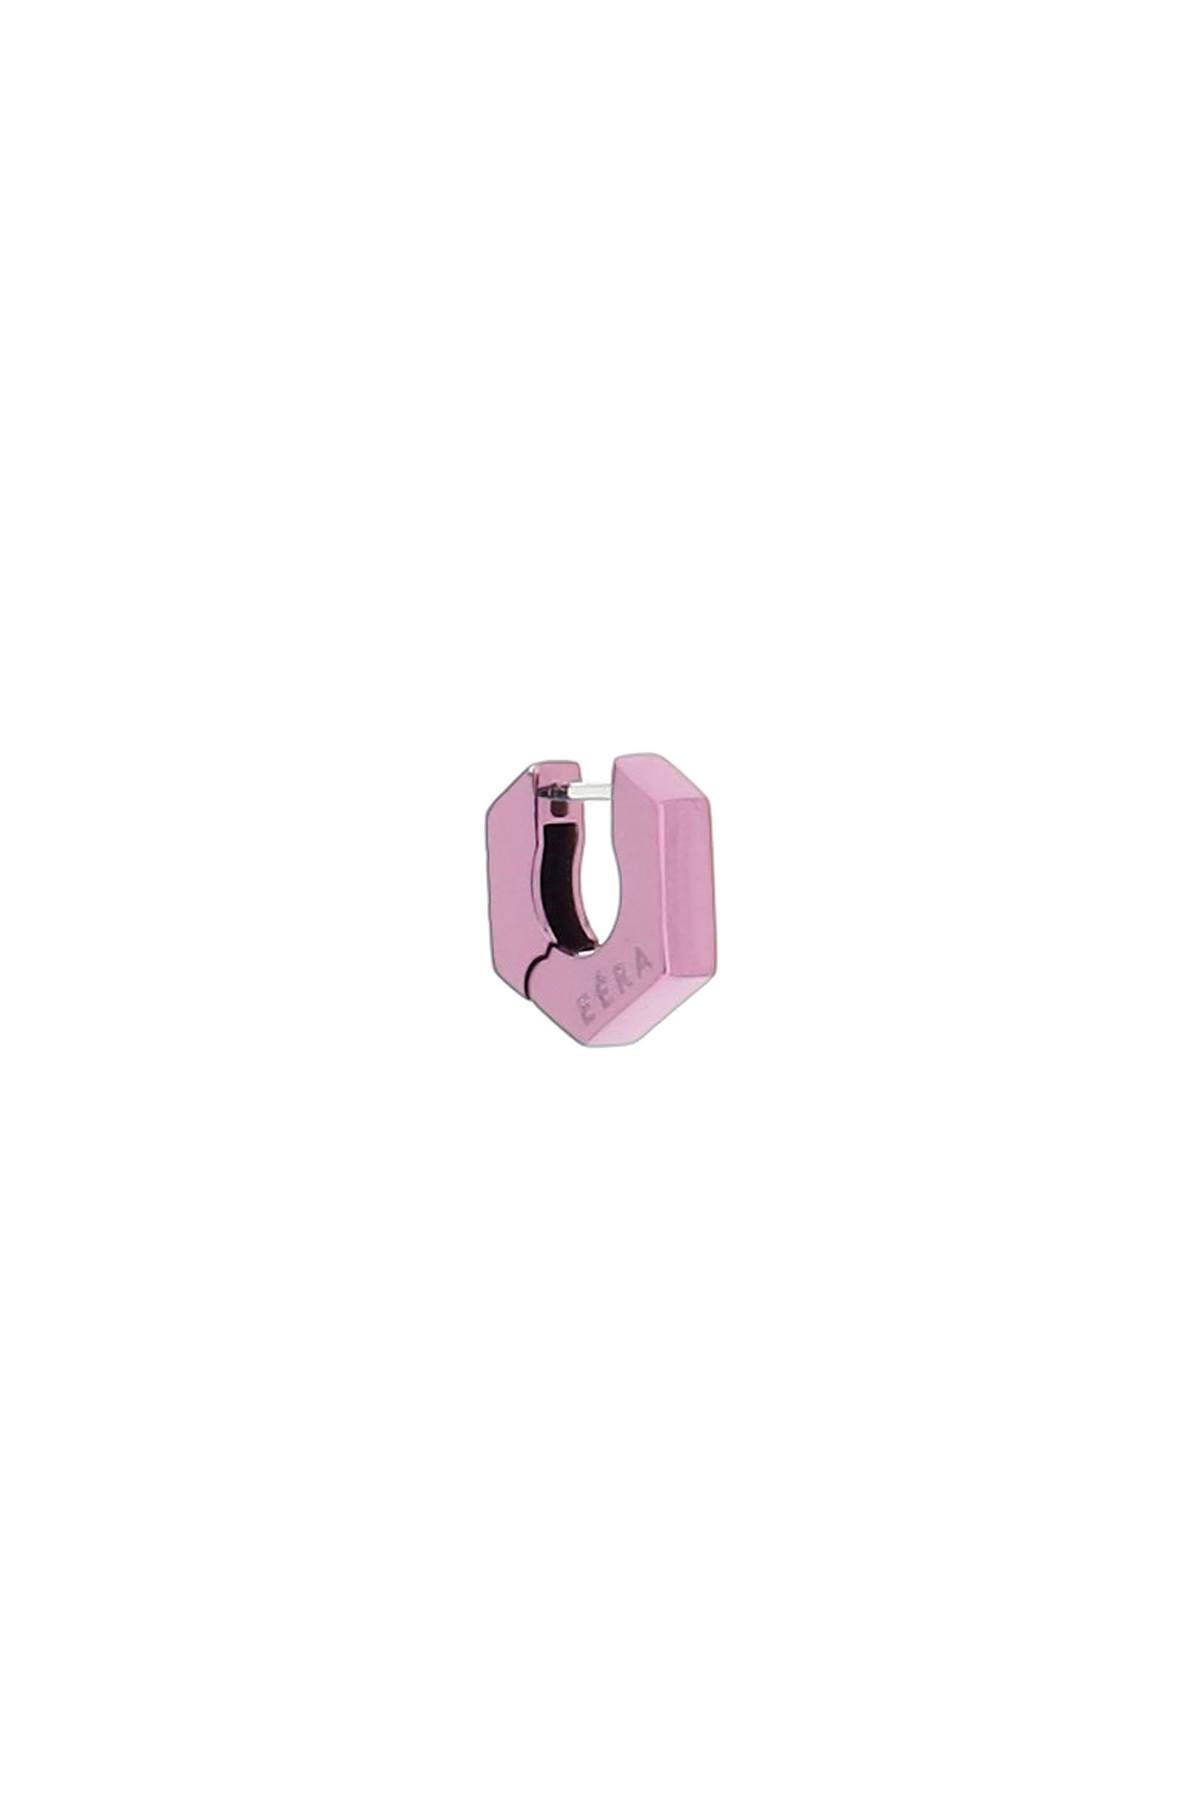 Eéra Mini Dado Single Earrings In Purple (purple)